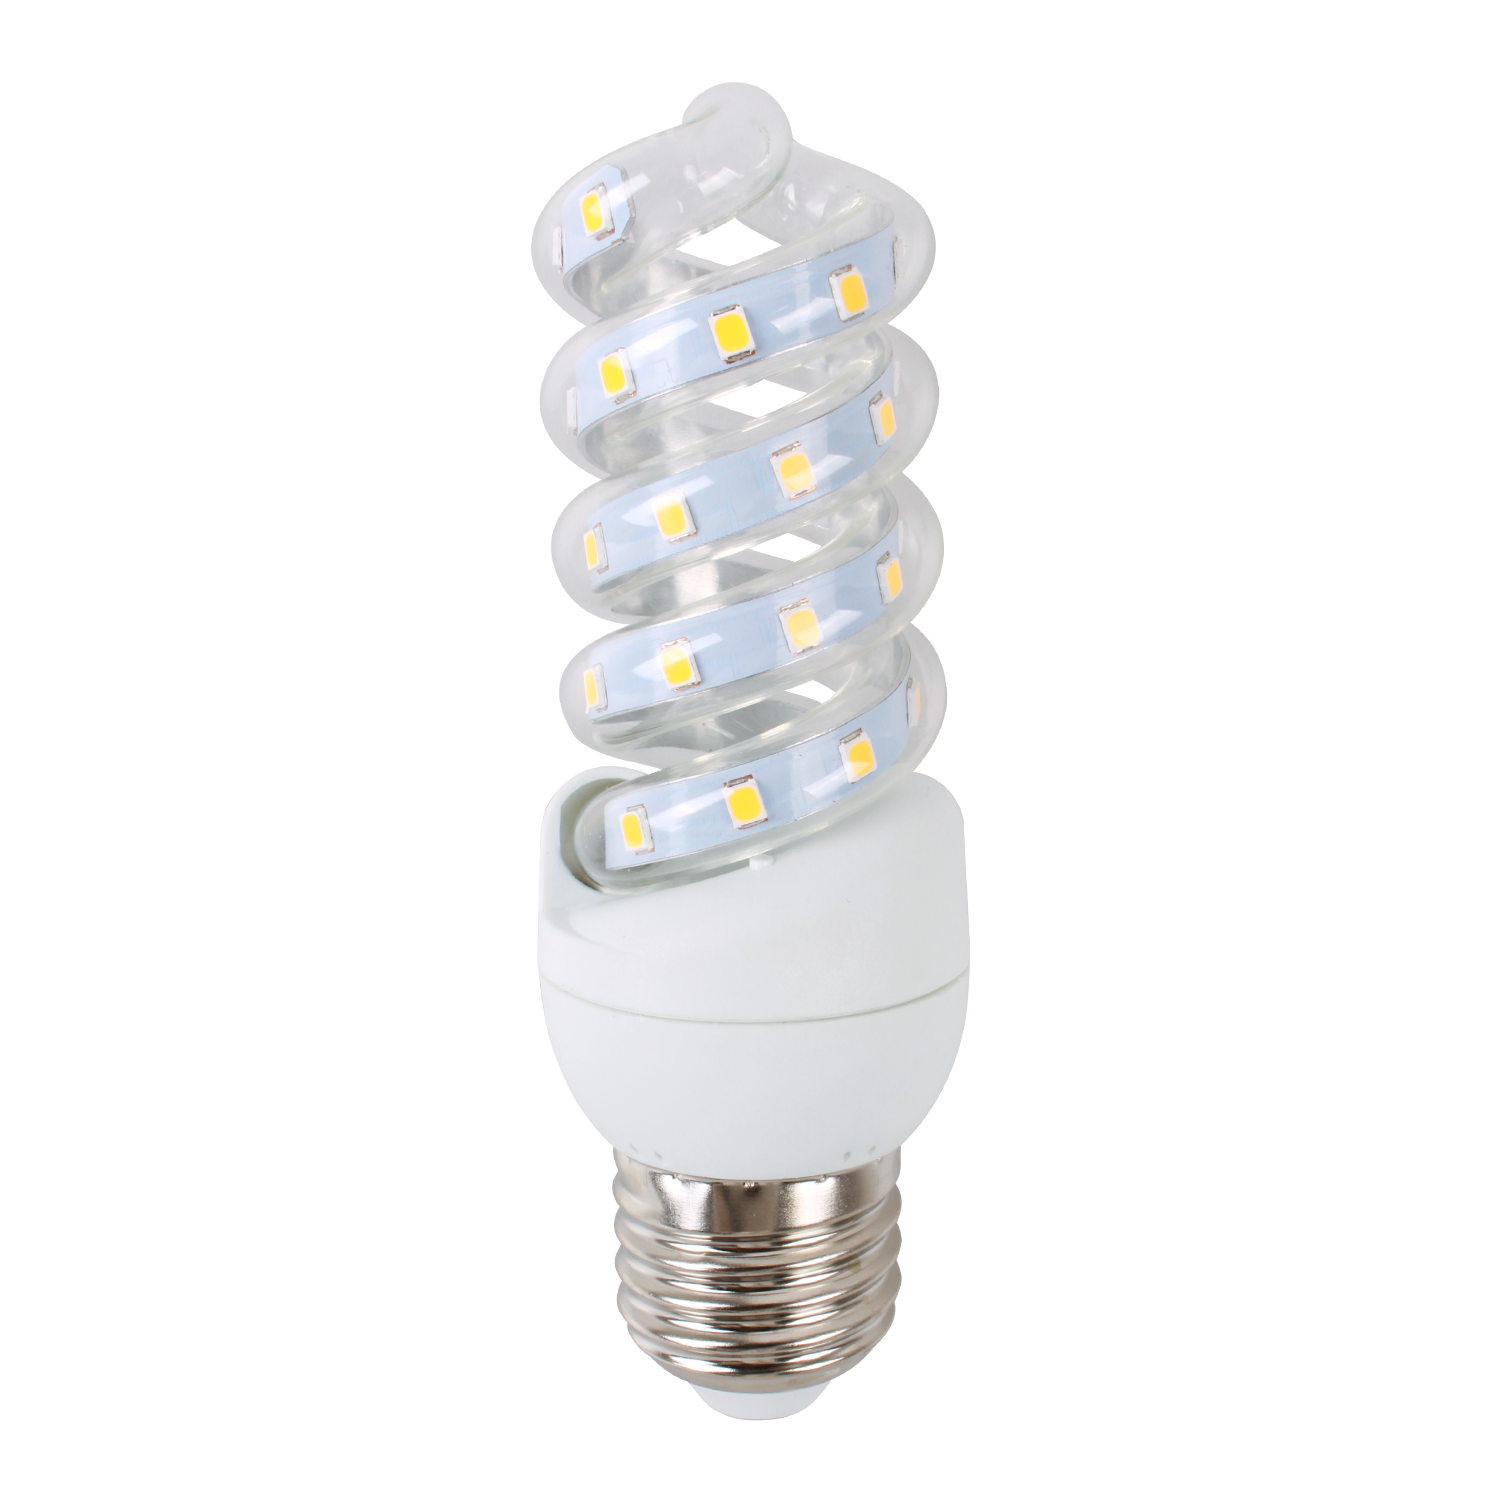 LED21 LED žárovka 7W E27 B5 630lm Teplá bílá